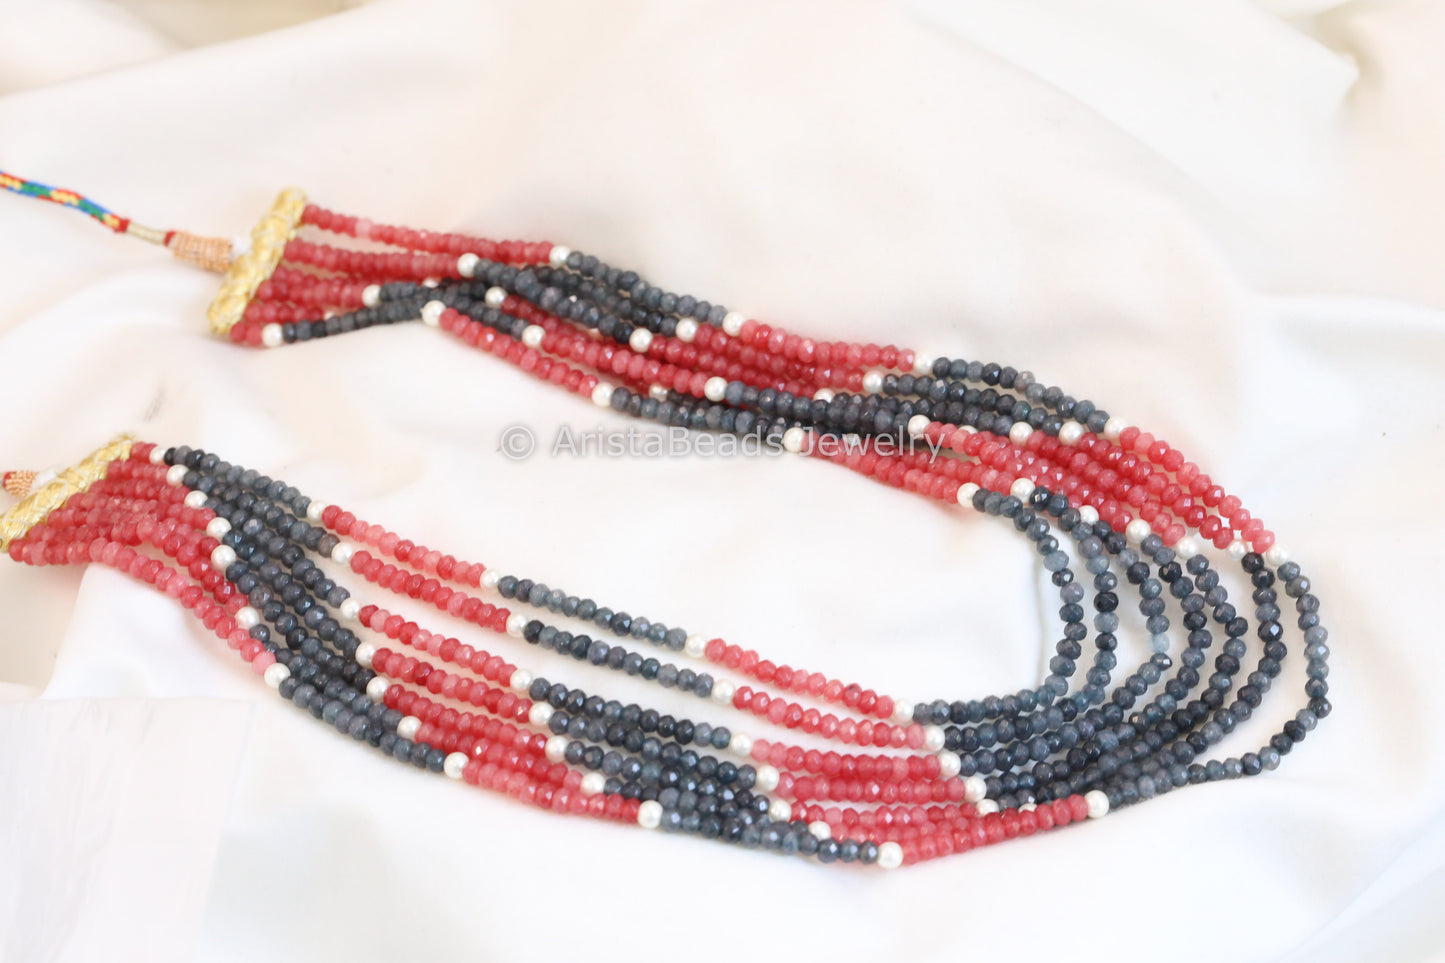 7 Strand Semiprecious Beads Necklace - Style 7